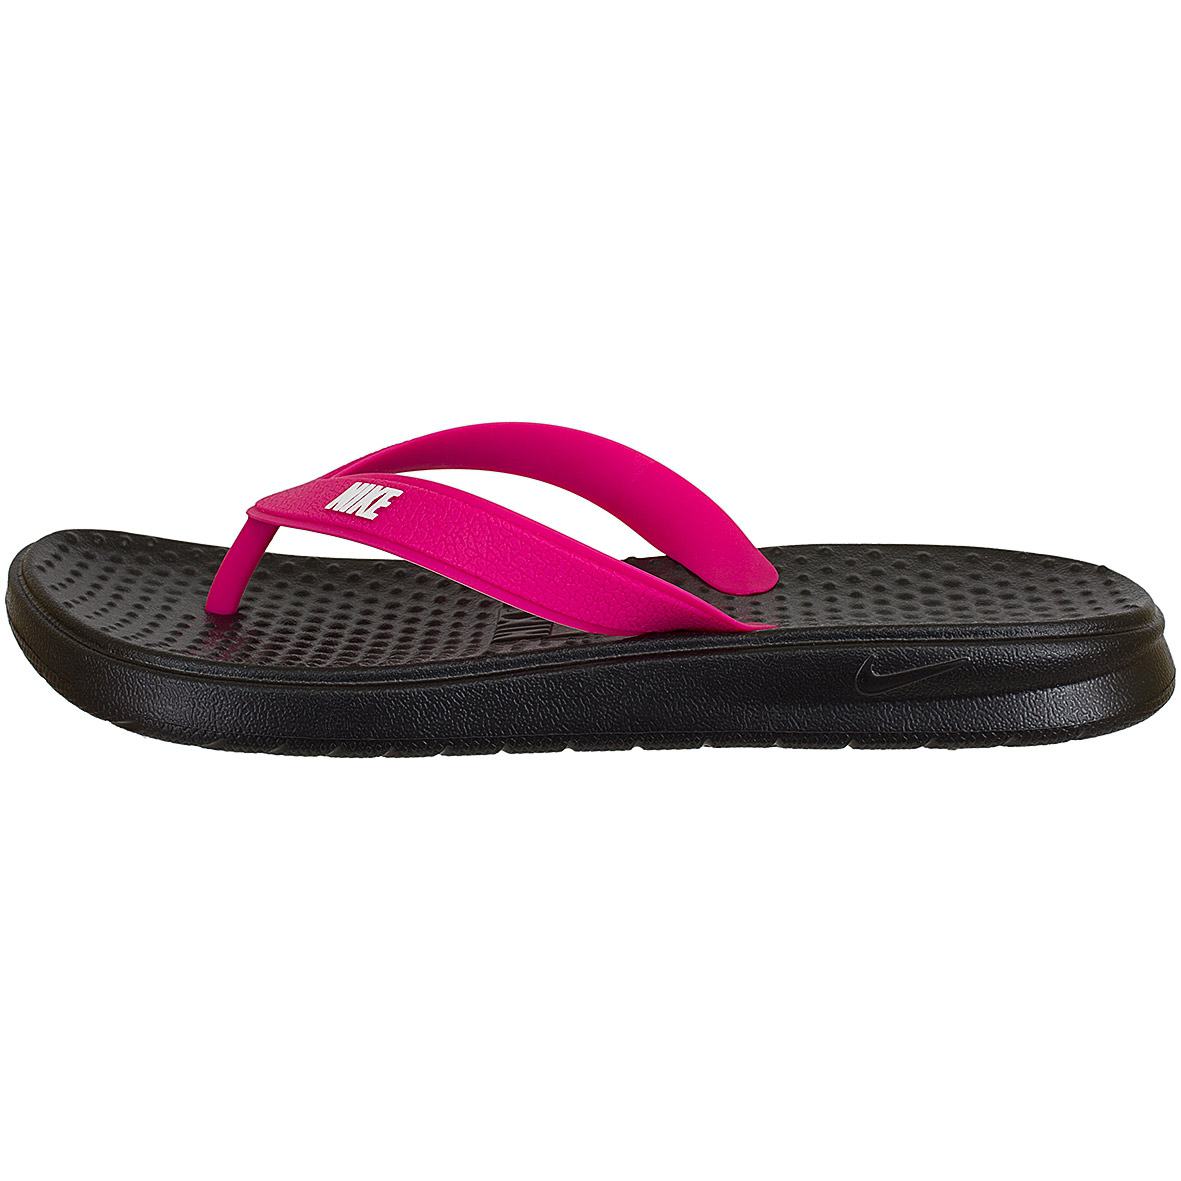 ☆ Nike Damen Flip-Flops Solay Thong schwarz/pink - hier bestellen!